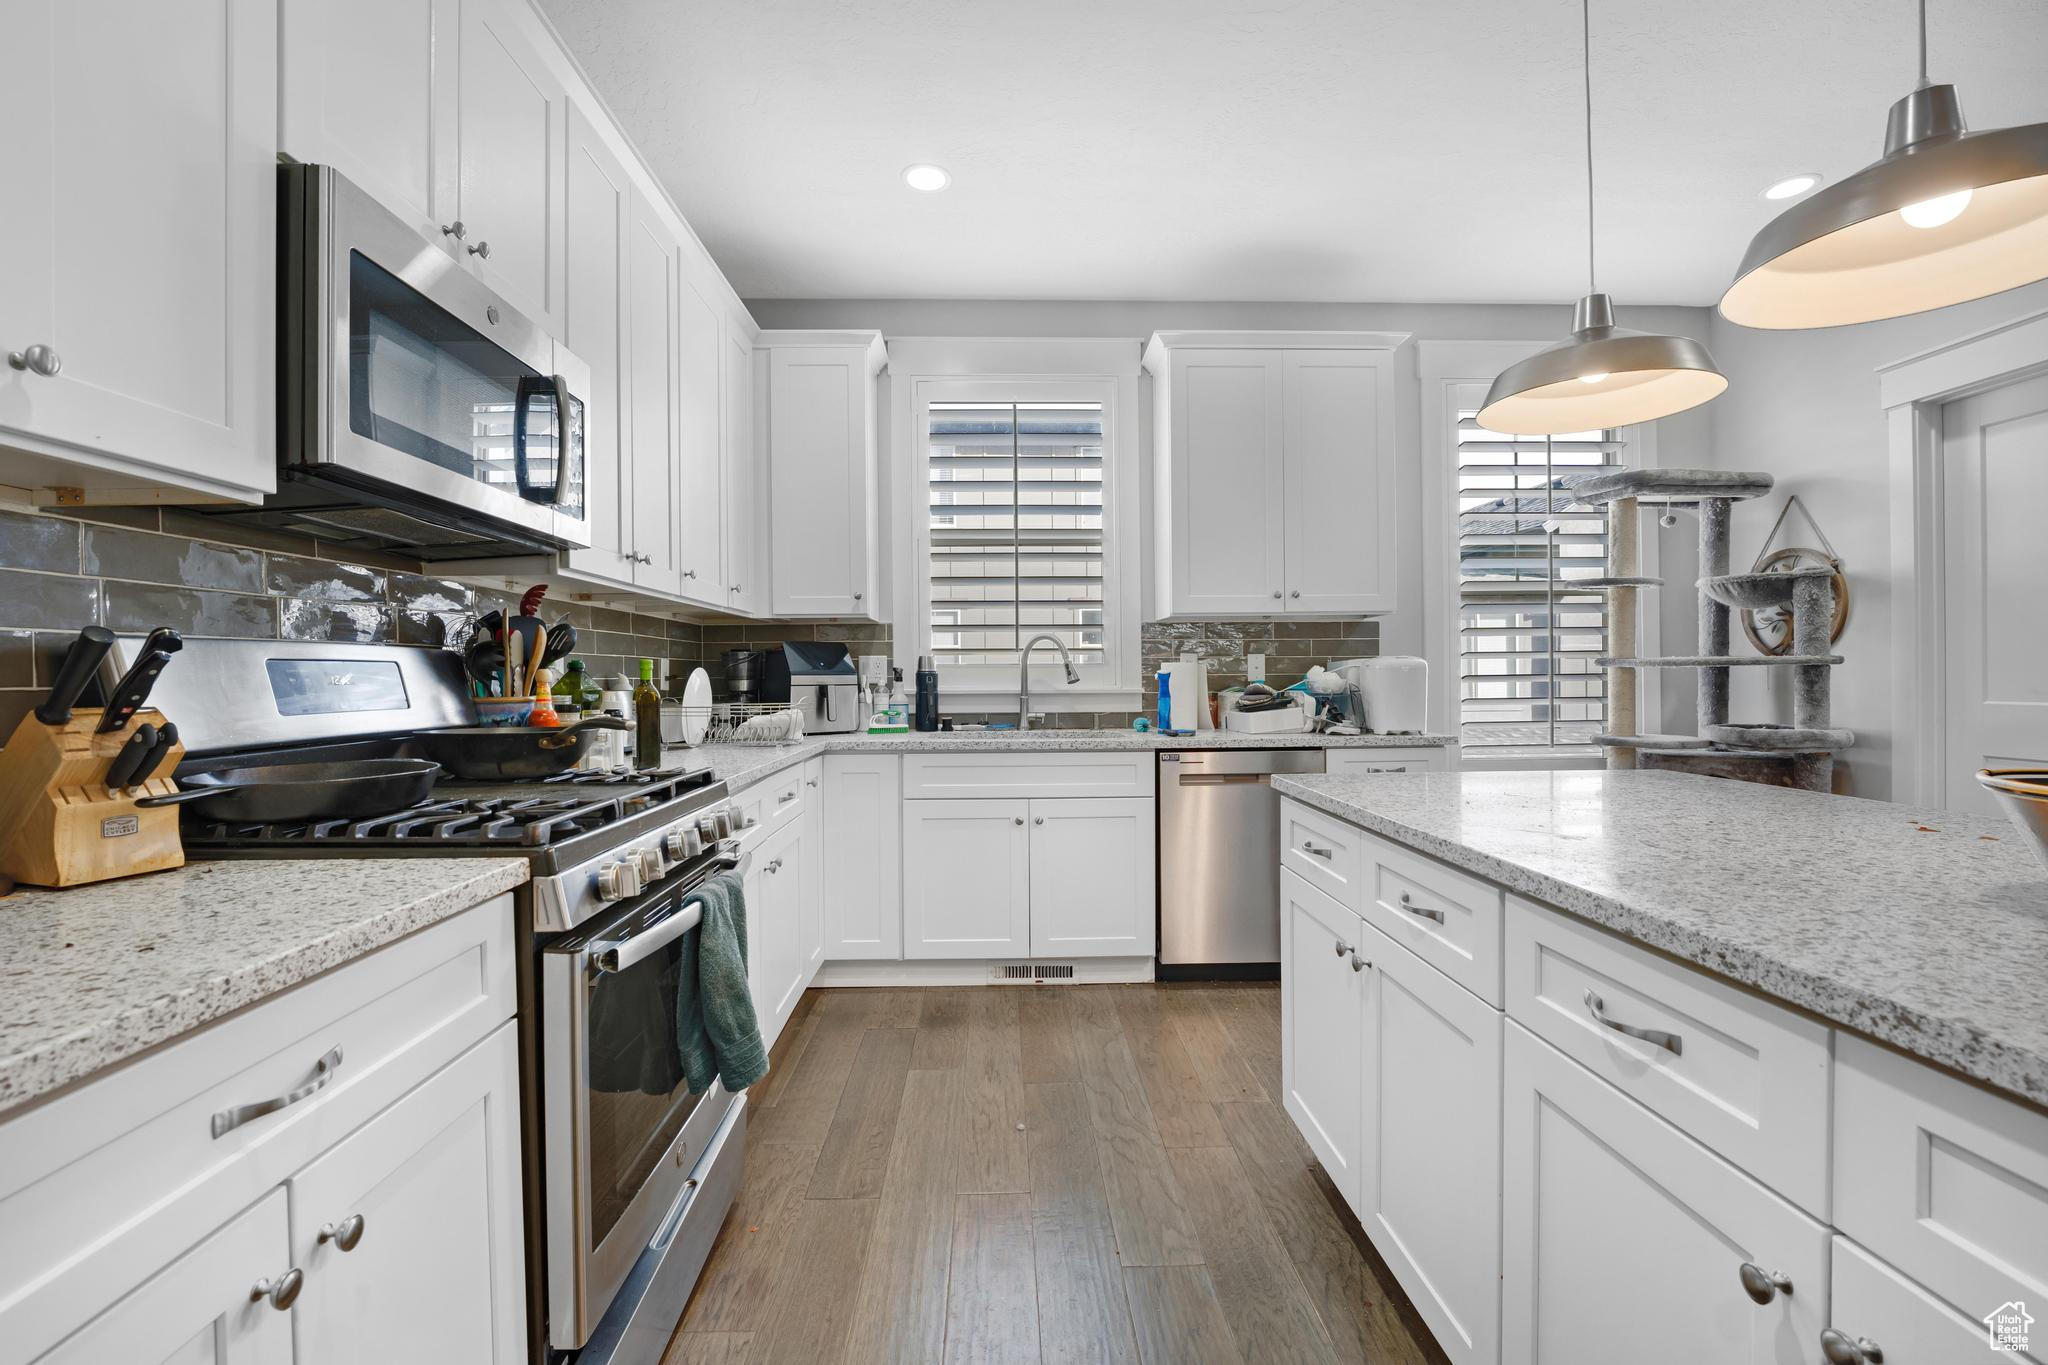 Kitchen with tasteful backsplash, dark hardwood / wood-style flooring, stainless steel appliances, and pendant lighting